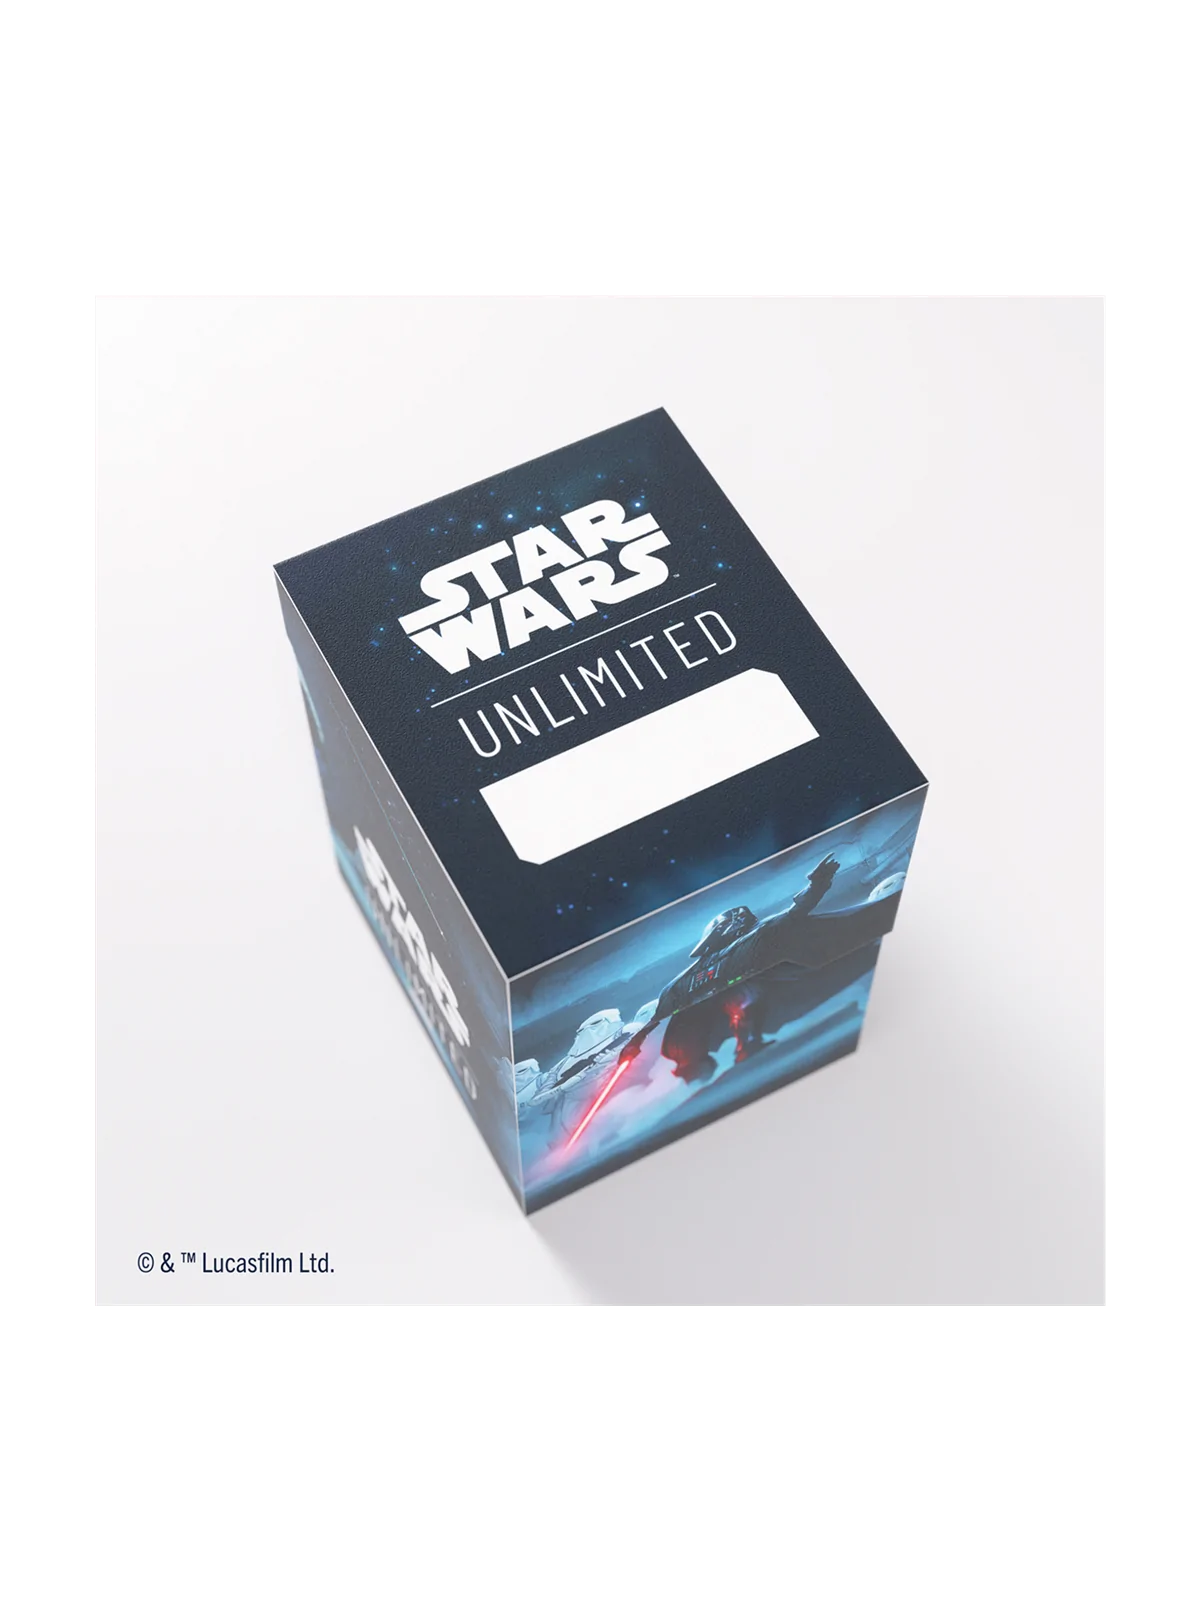 Comprar Star Wars Unlimited: Soft Crate Darth Vader barato al mejor pr